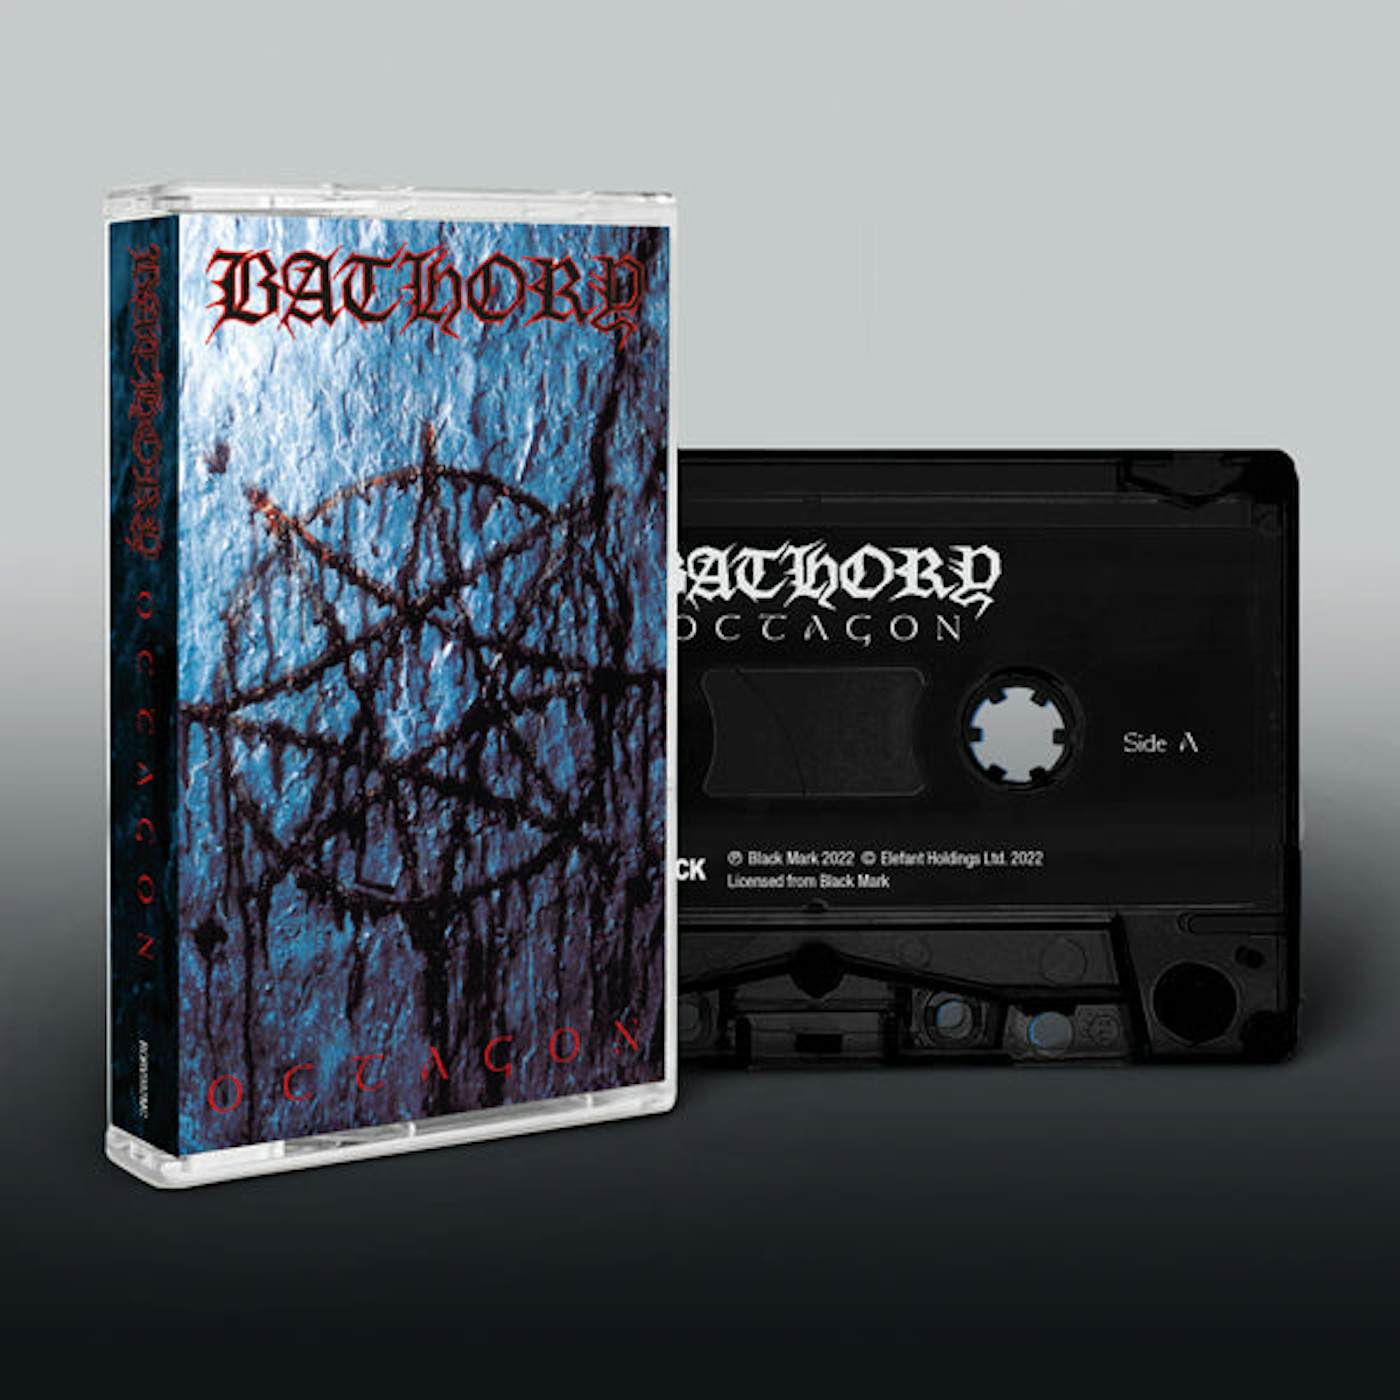 Bathory Music Cassette - Octagon